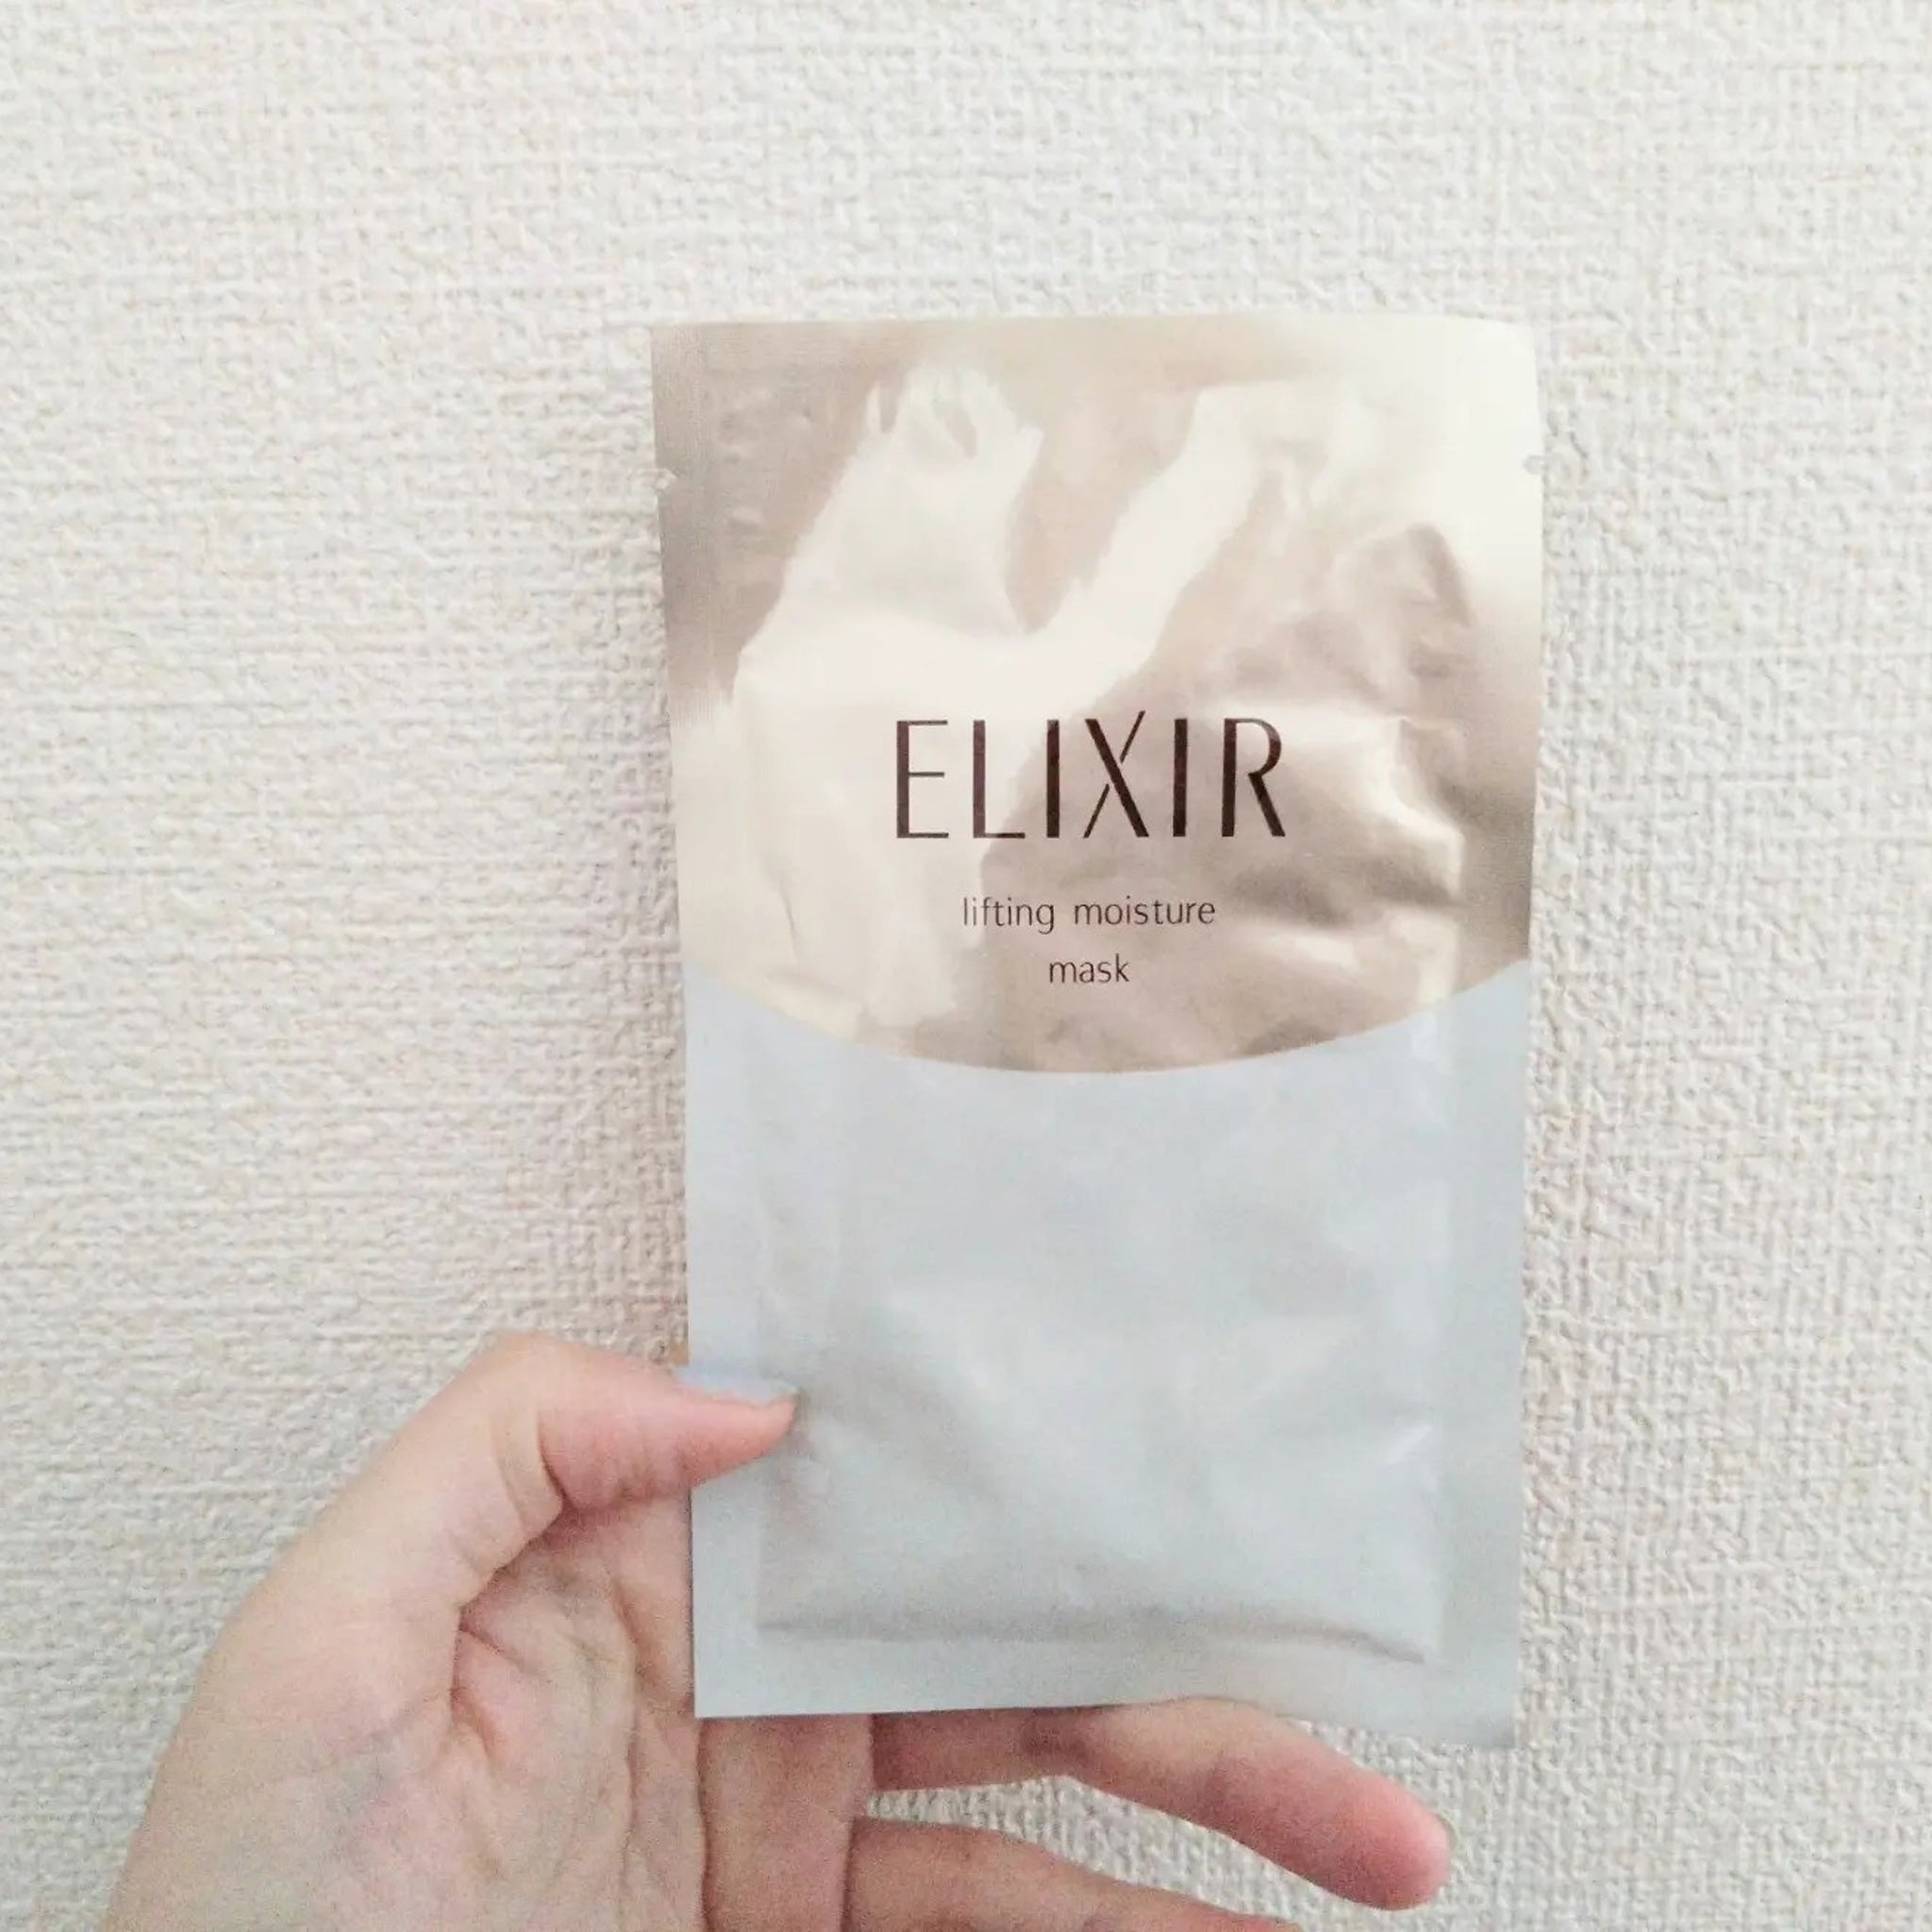 Shiseido Elixir Superieur Lifting Moisture Mask 6pcs